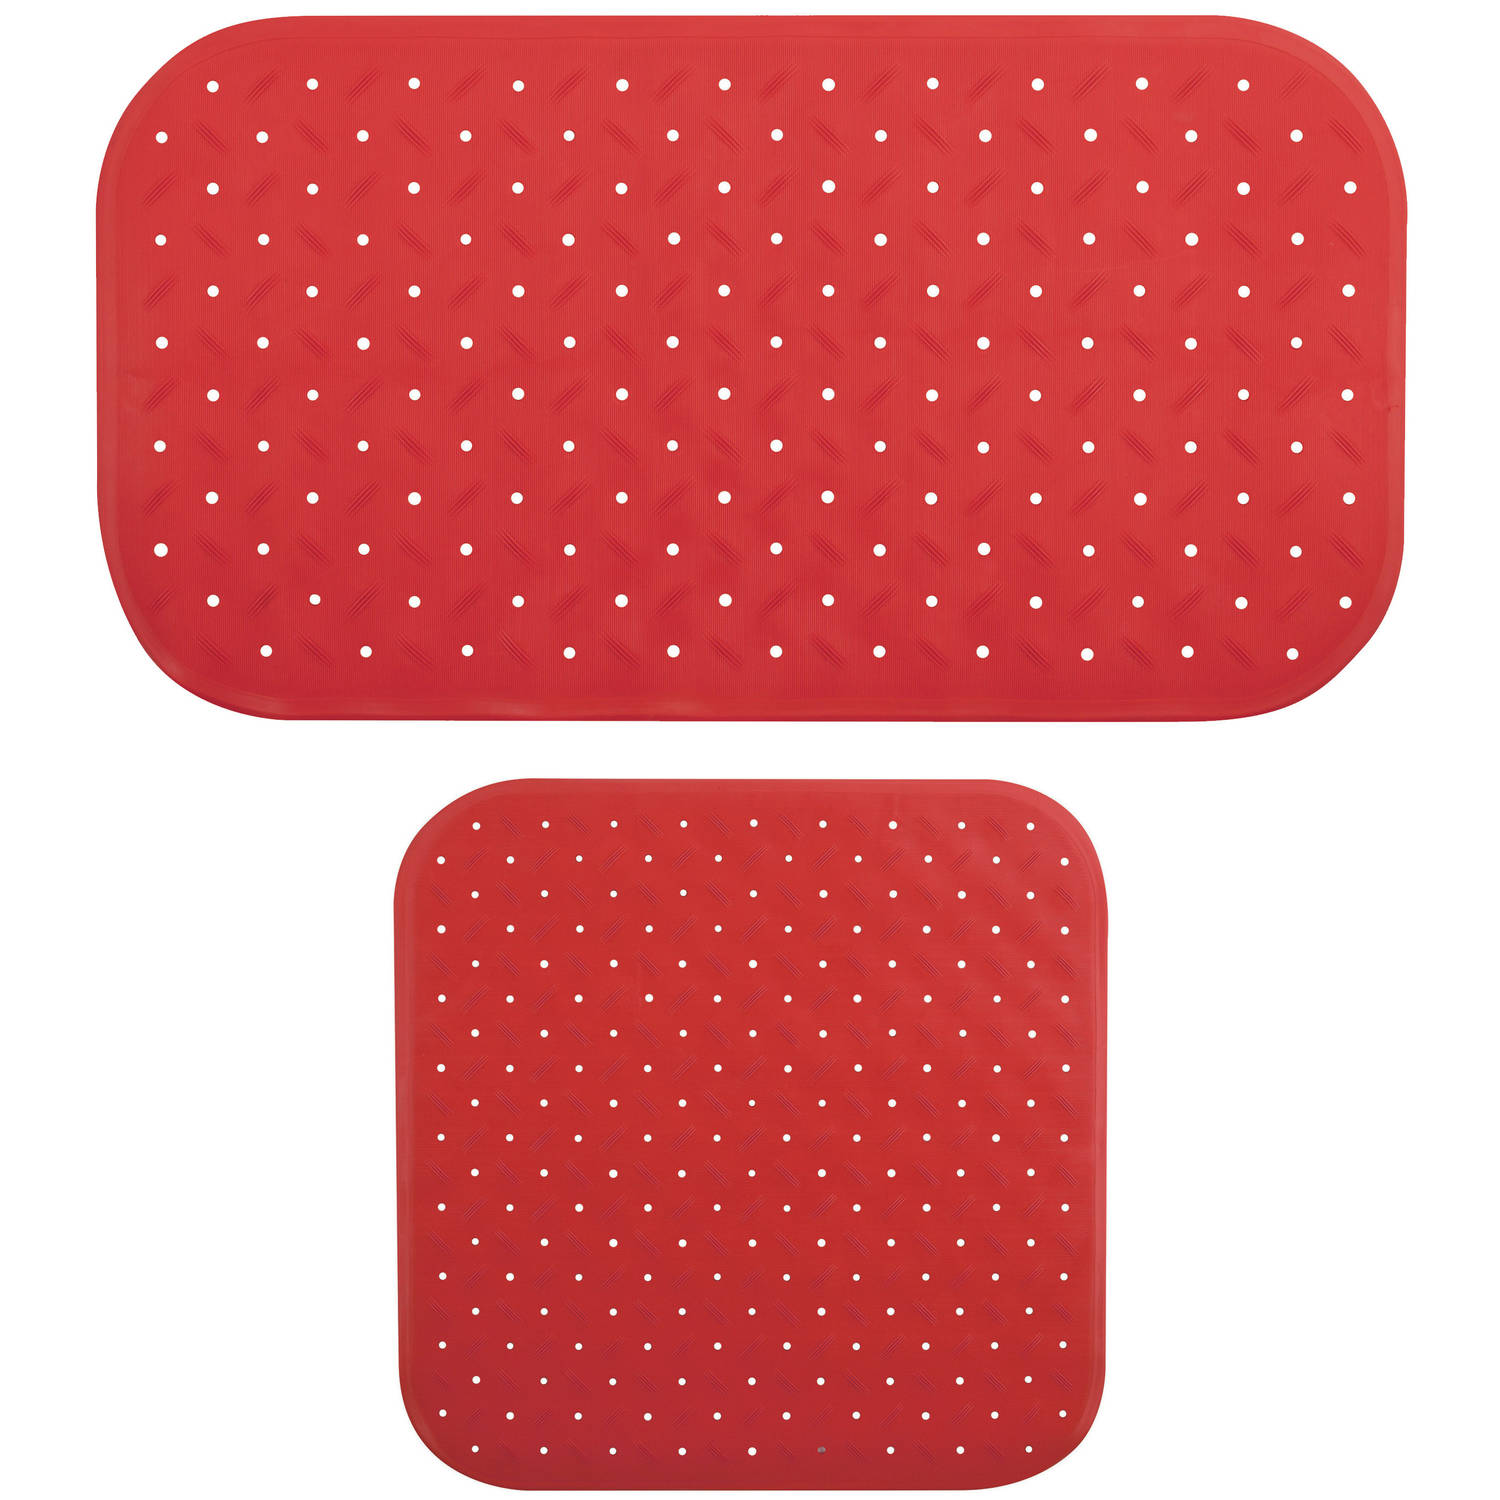 MSV Douche-bad anti-slip matten set badkamer rubber 2x stuks rood 2 formaten Badmatjes